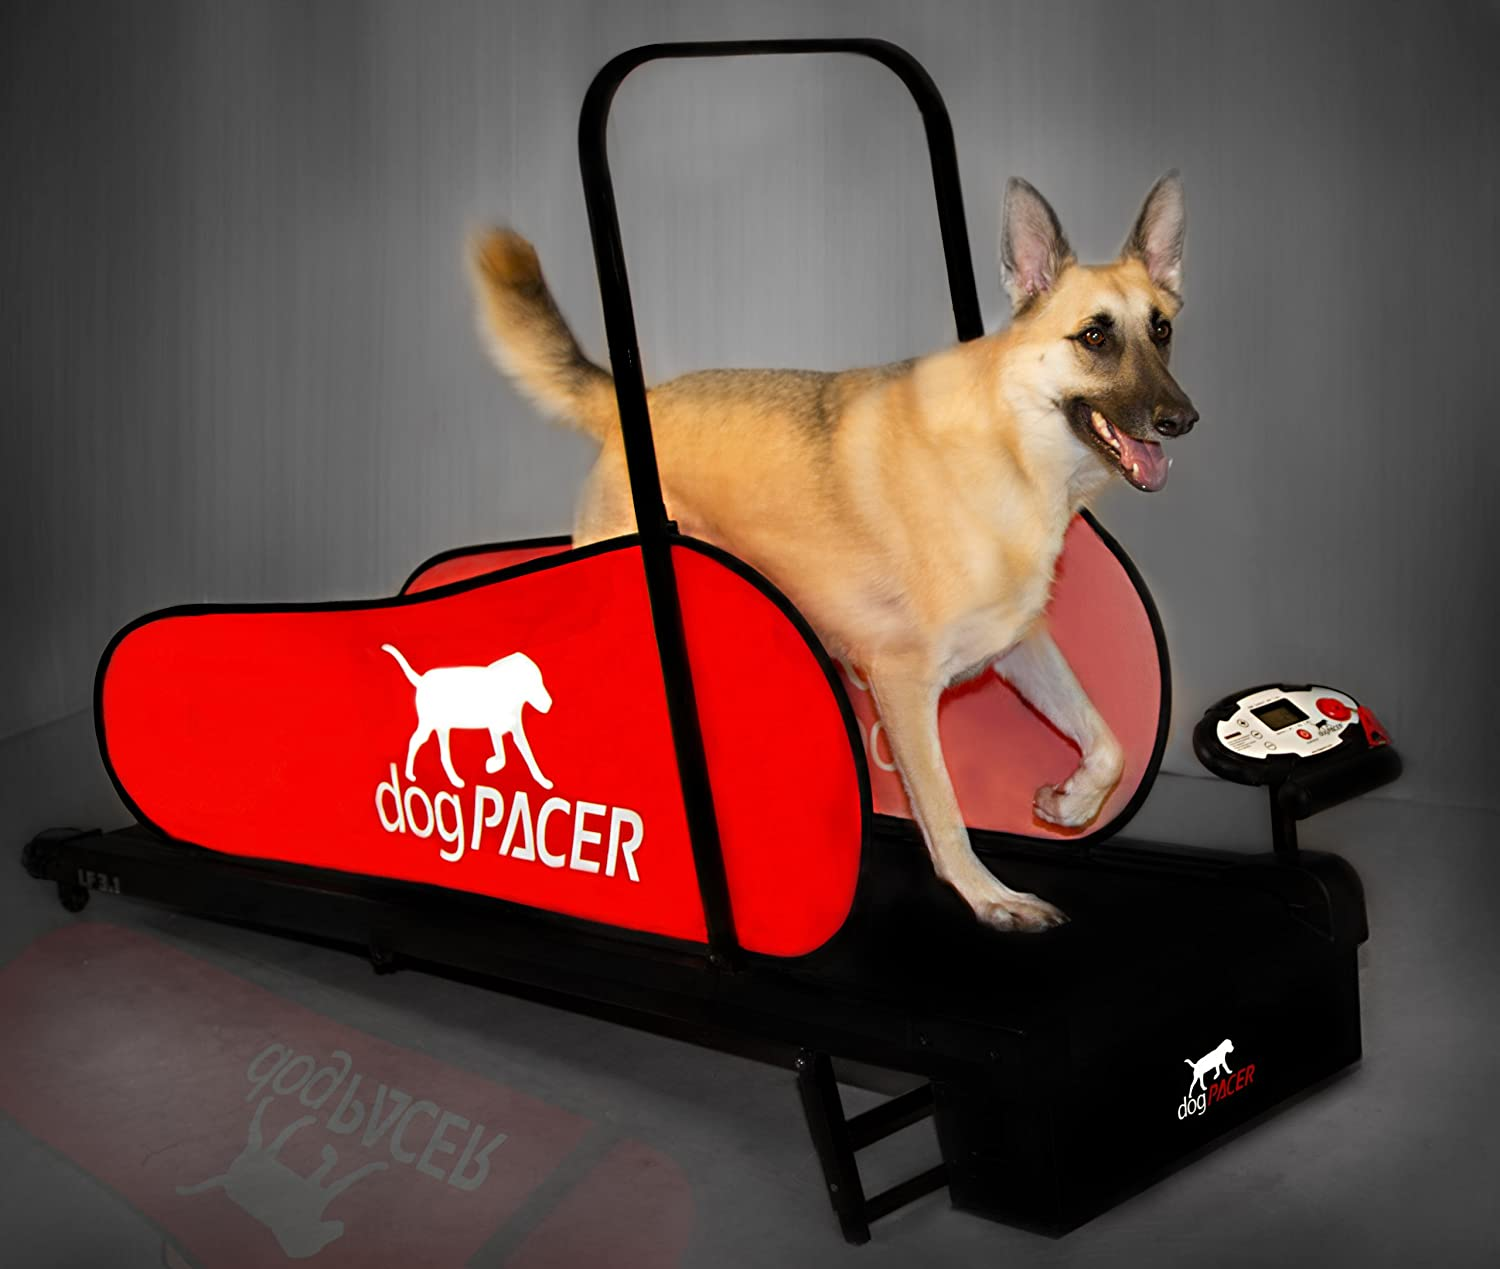 A mid size dog on a treadmill